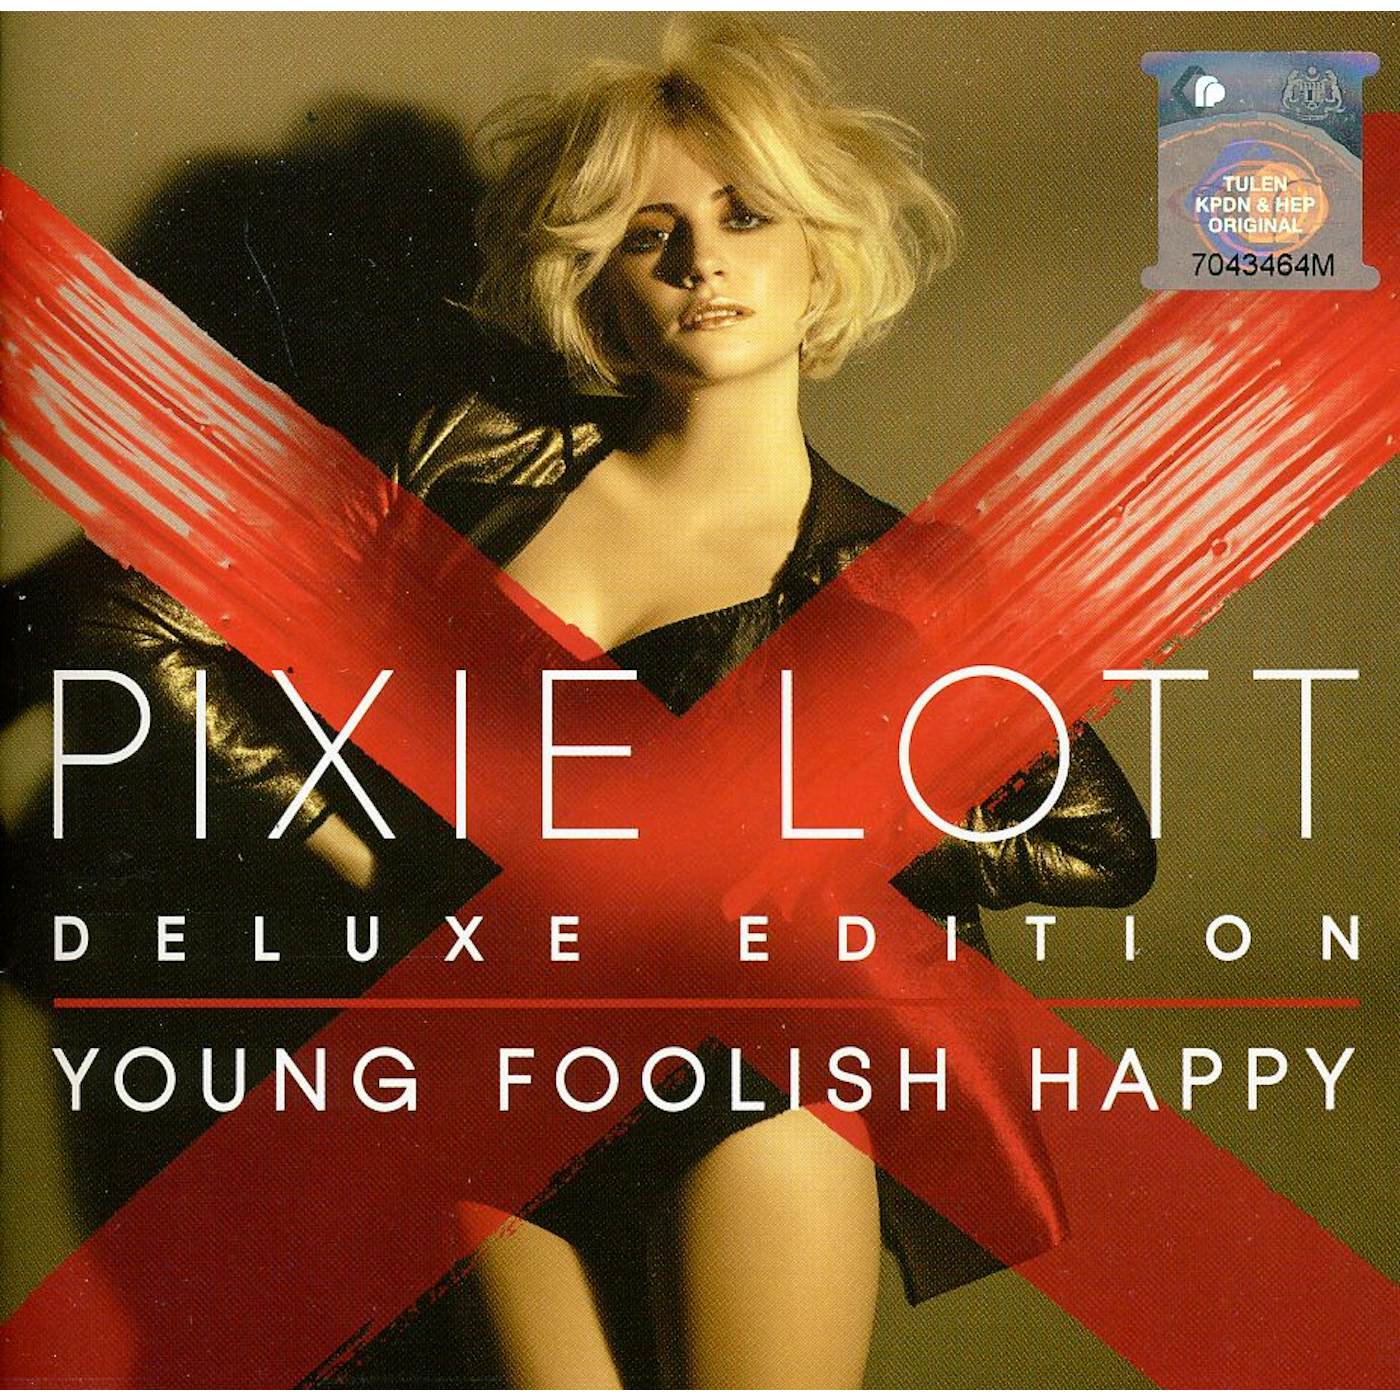 Pixie Lott YOUNG FOOLISH HAPPY CD